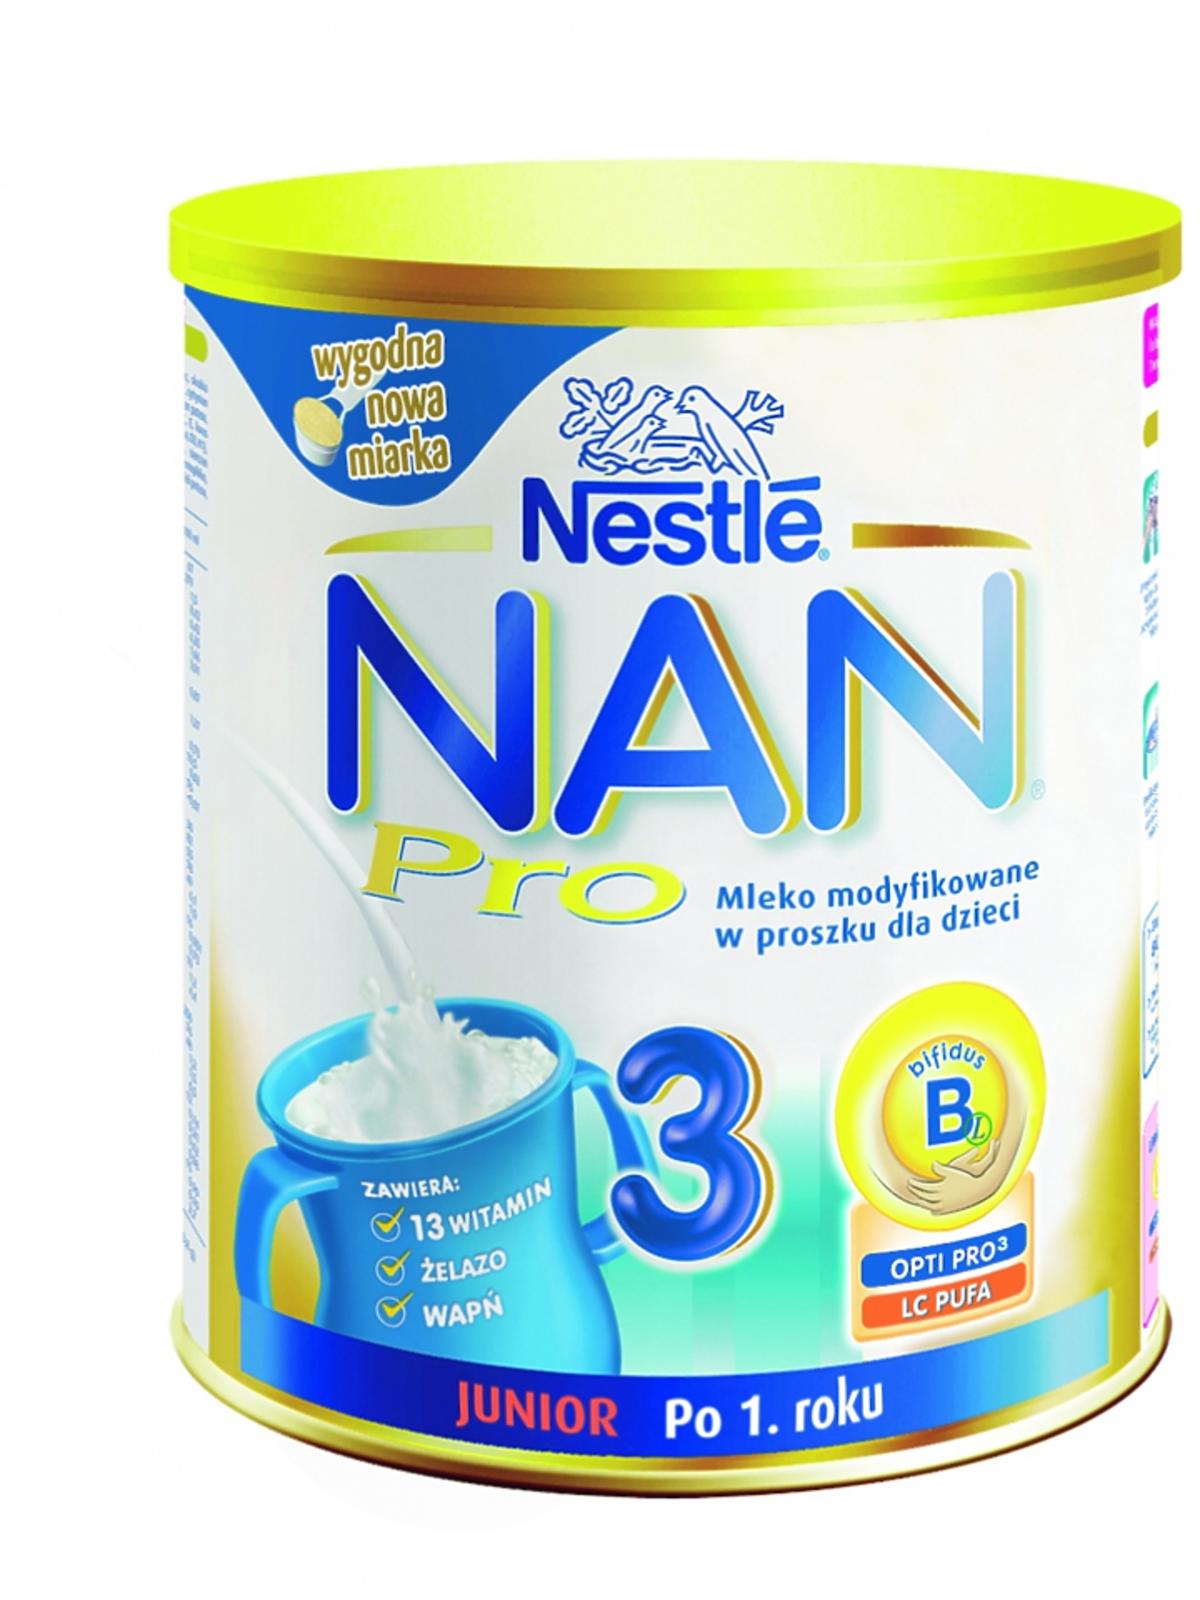 mleko modyfikowane, mleko NAN Nestle